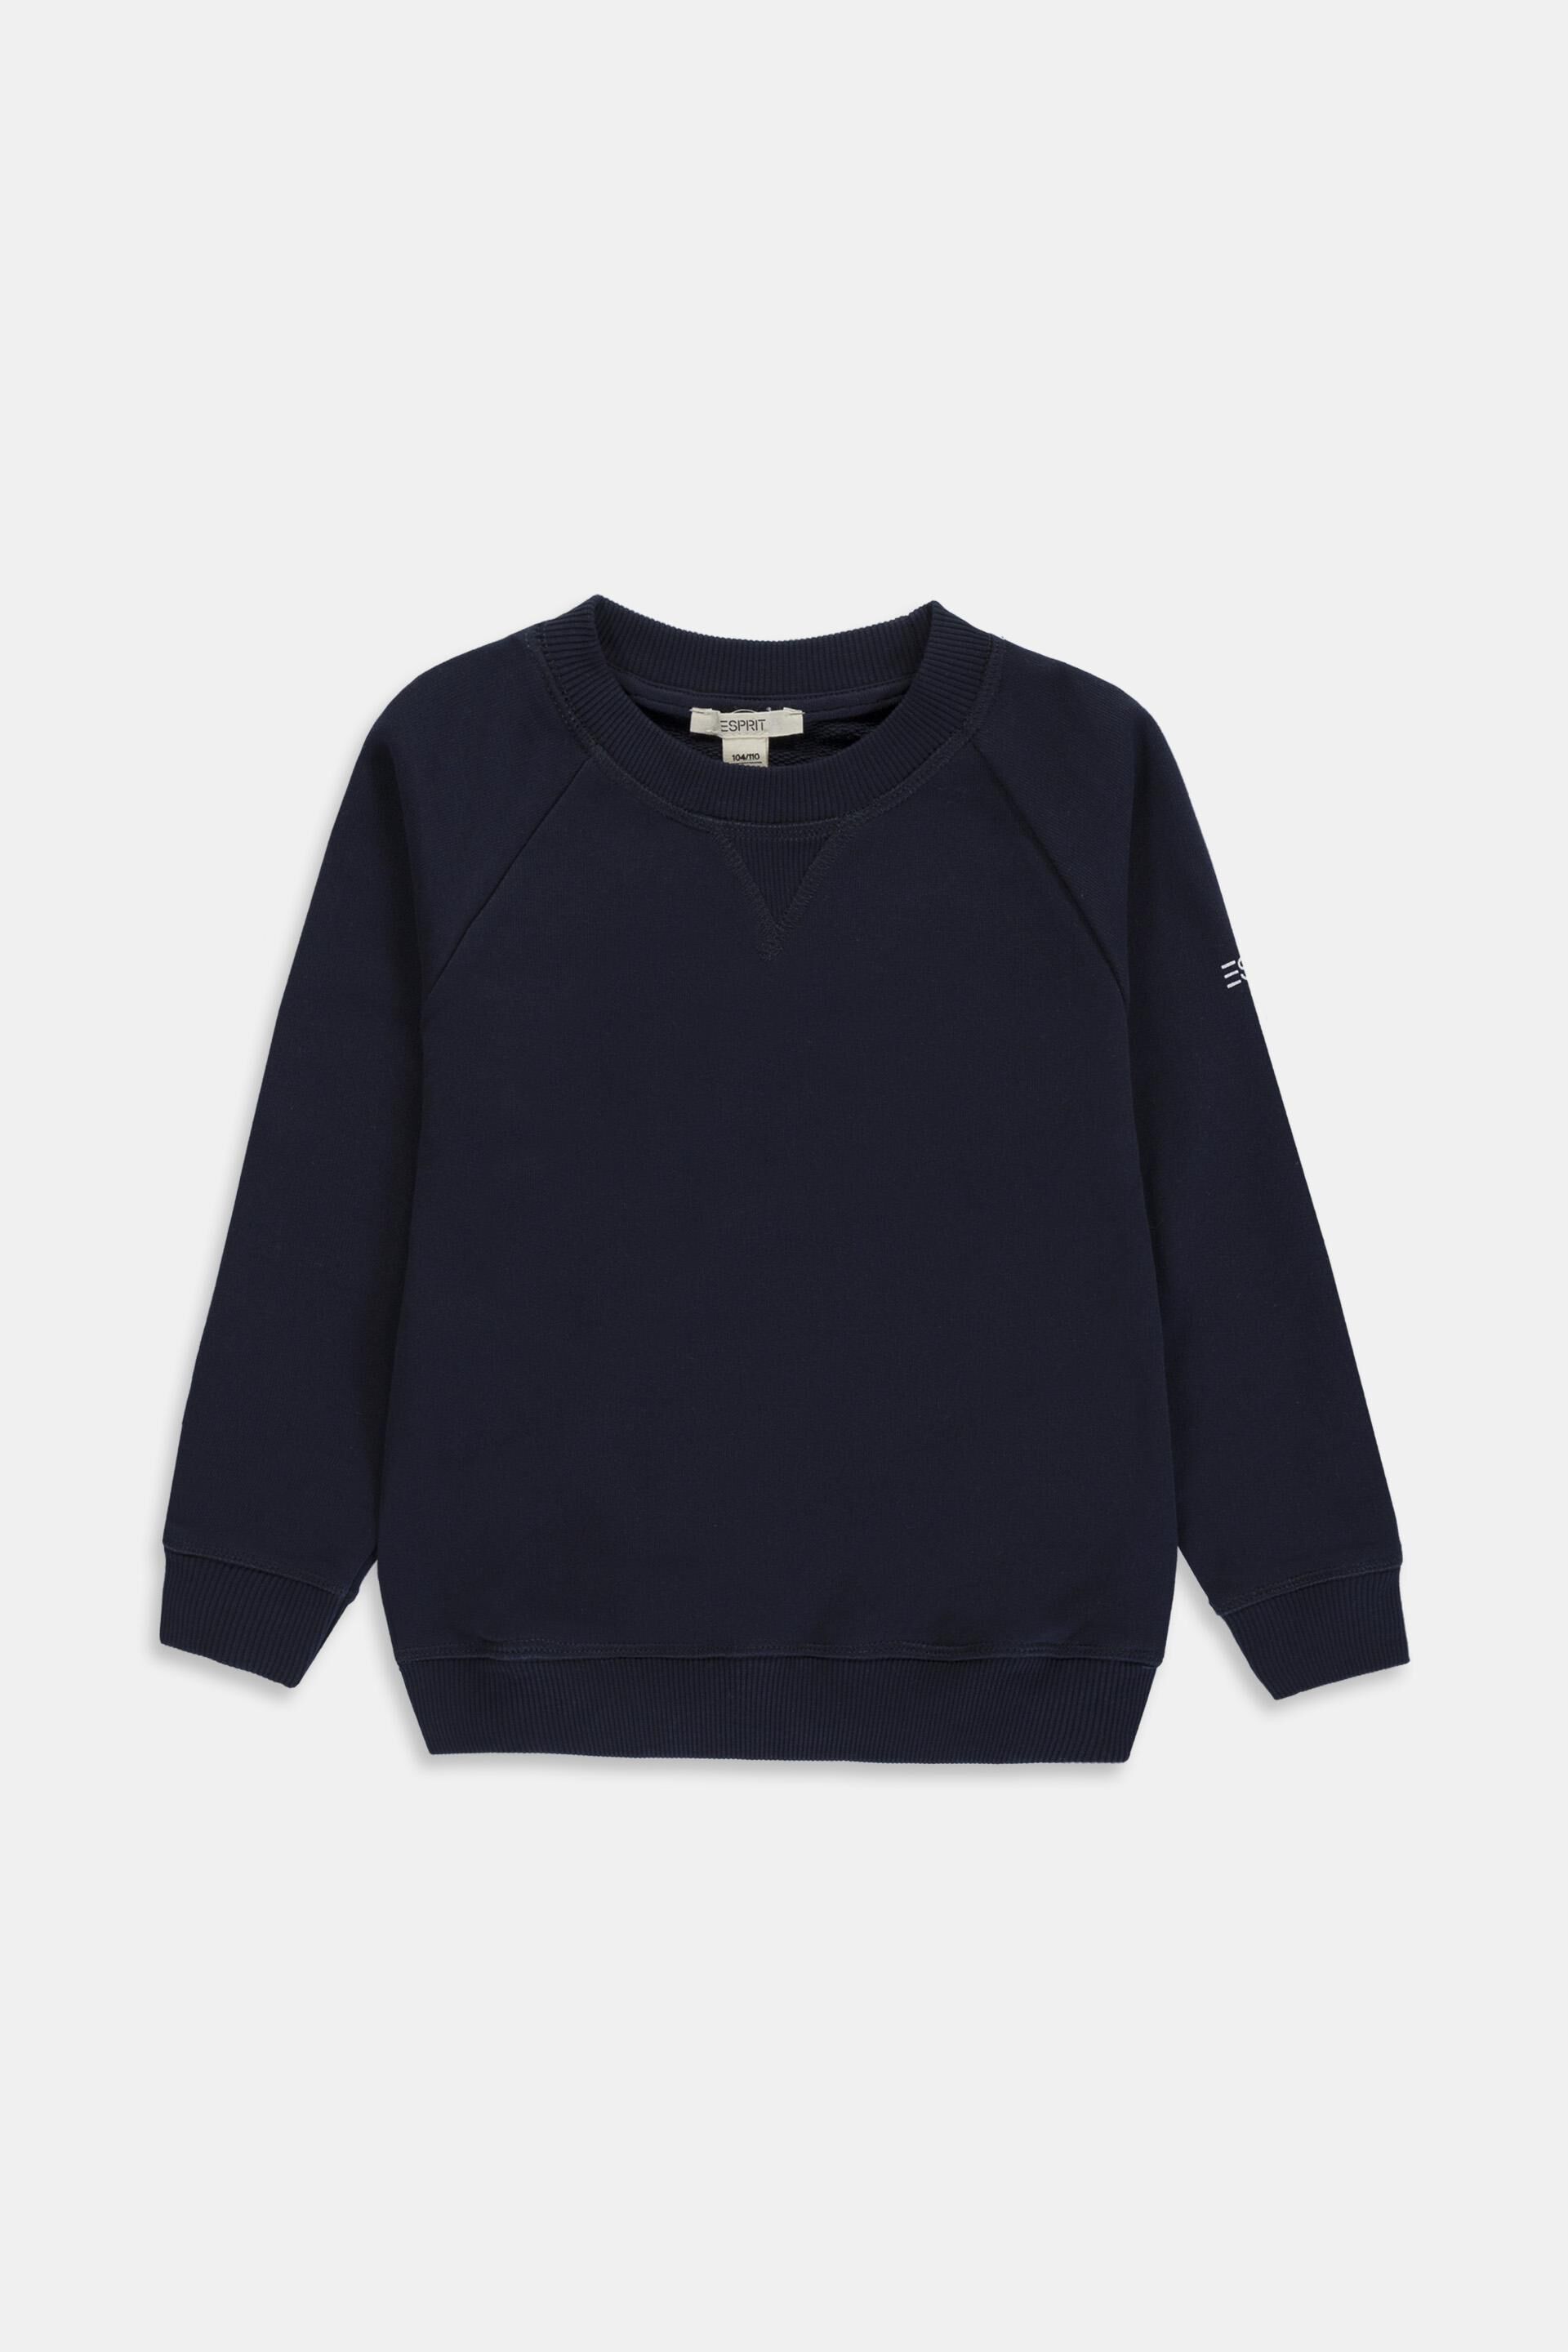 Esprit logo 100% Sweatshirt with cotton of made